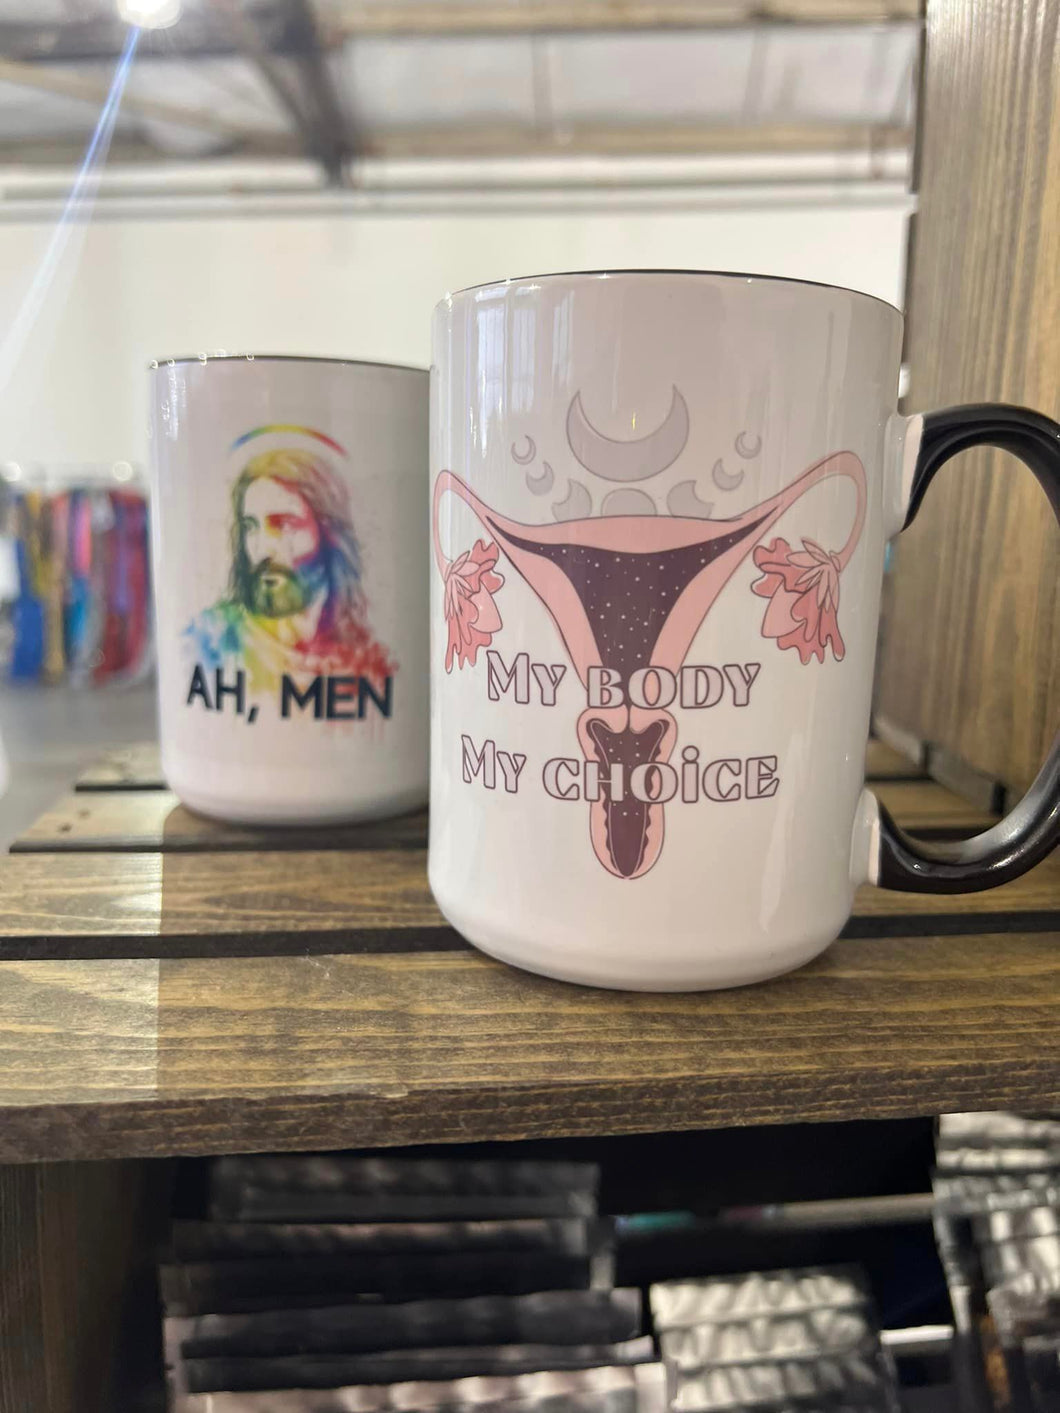 Ah, Men & My Body, My choice 15oz coffee / tea mug